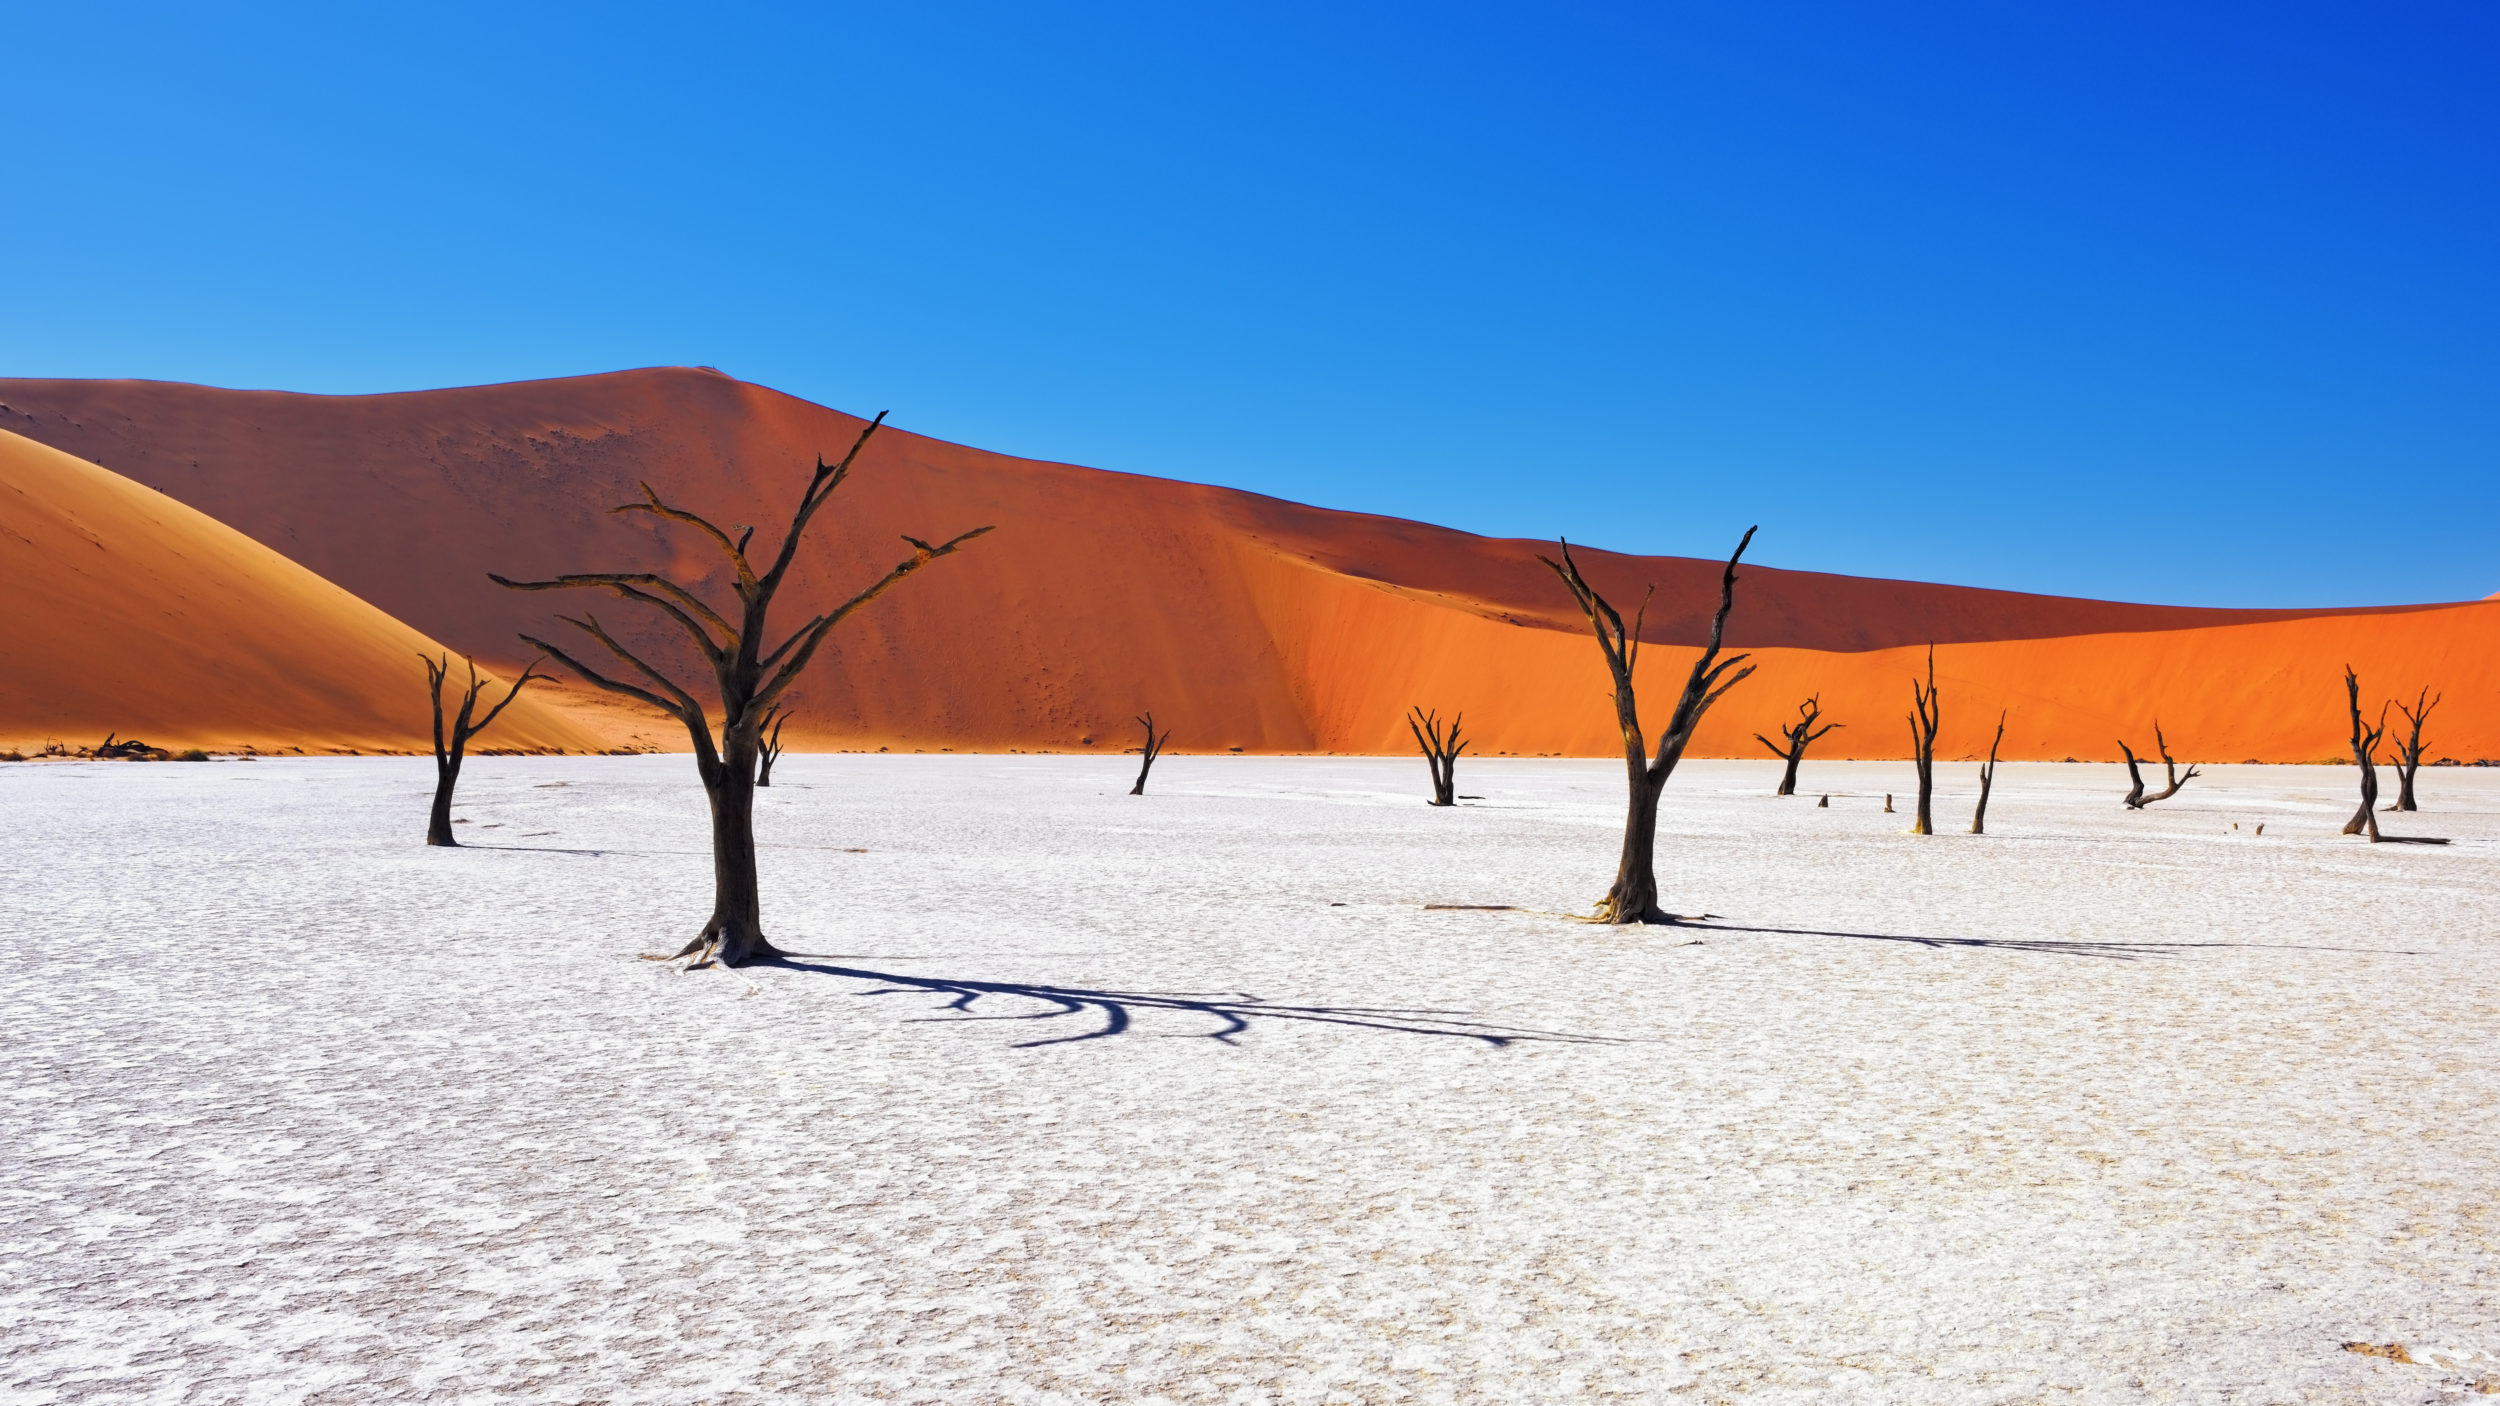 NAMIBIA - Vado al massimo nei Paradisi del Mondo